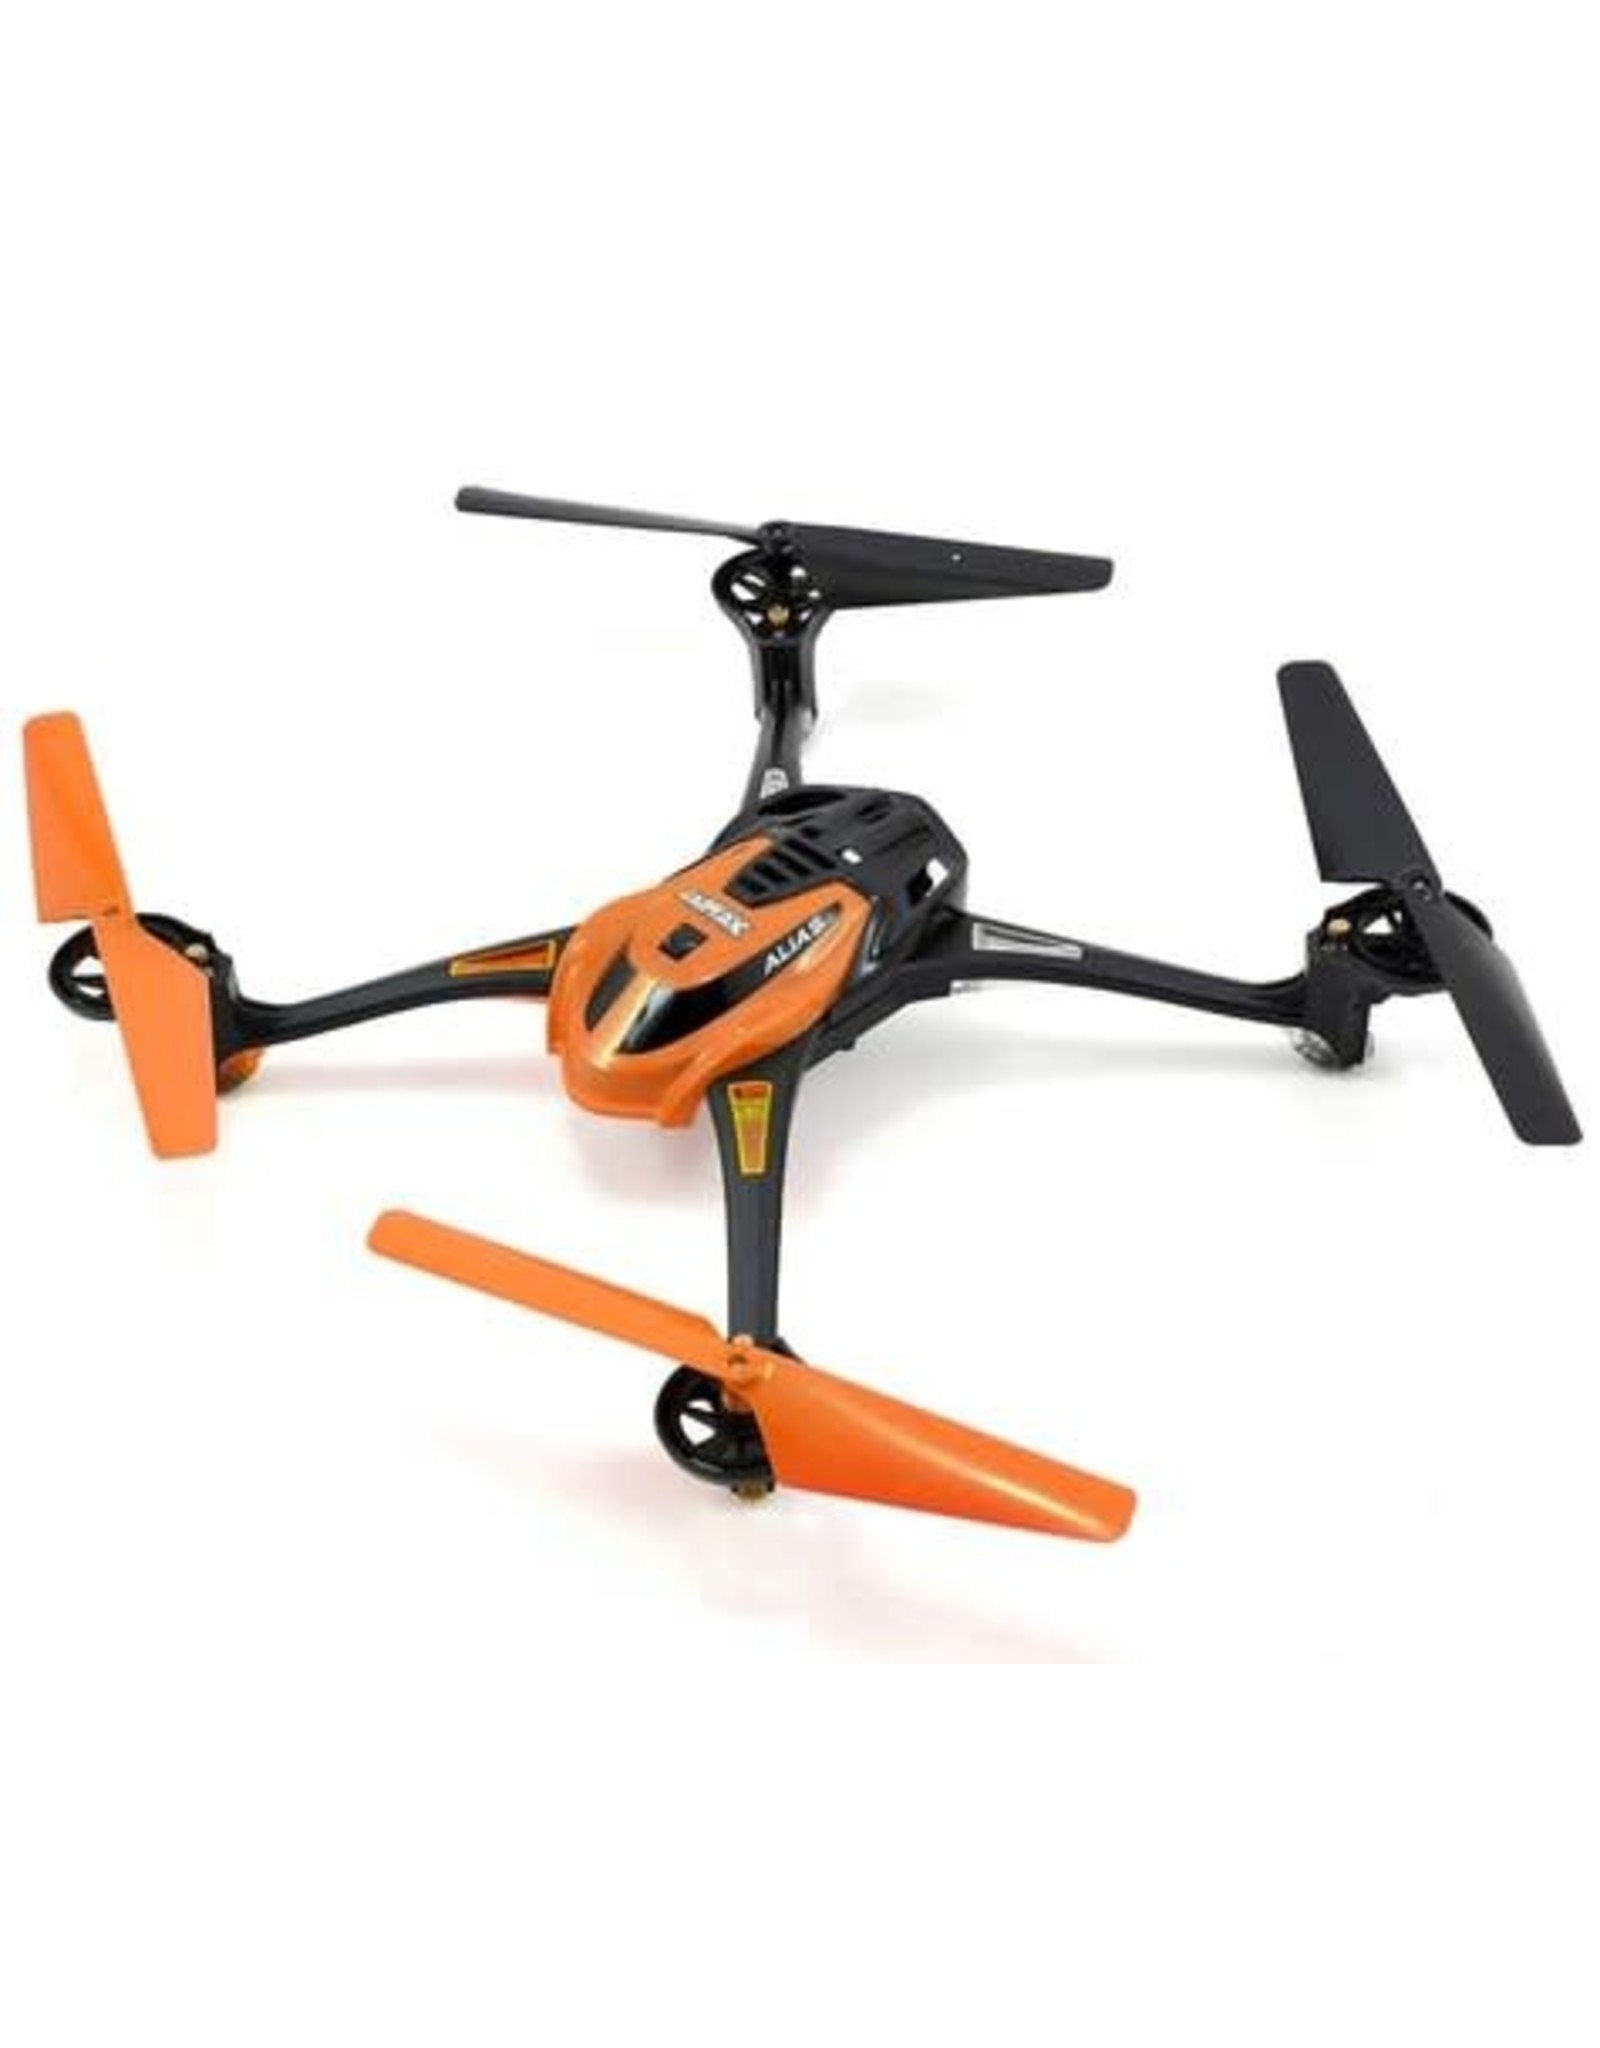 Traxxas Traxxas LaTrax Alias Ready-To-Fly Micro Electric Quadcopter Drone (Orange)